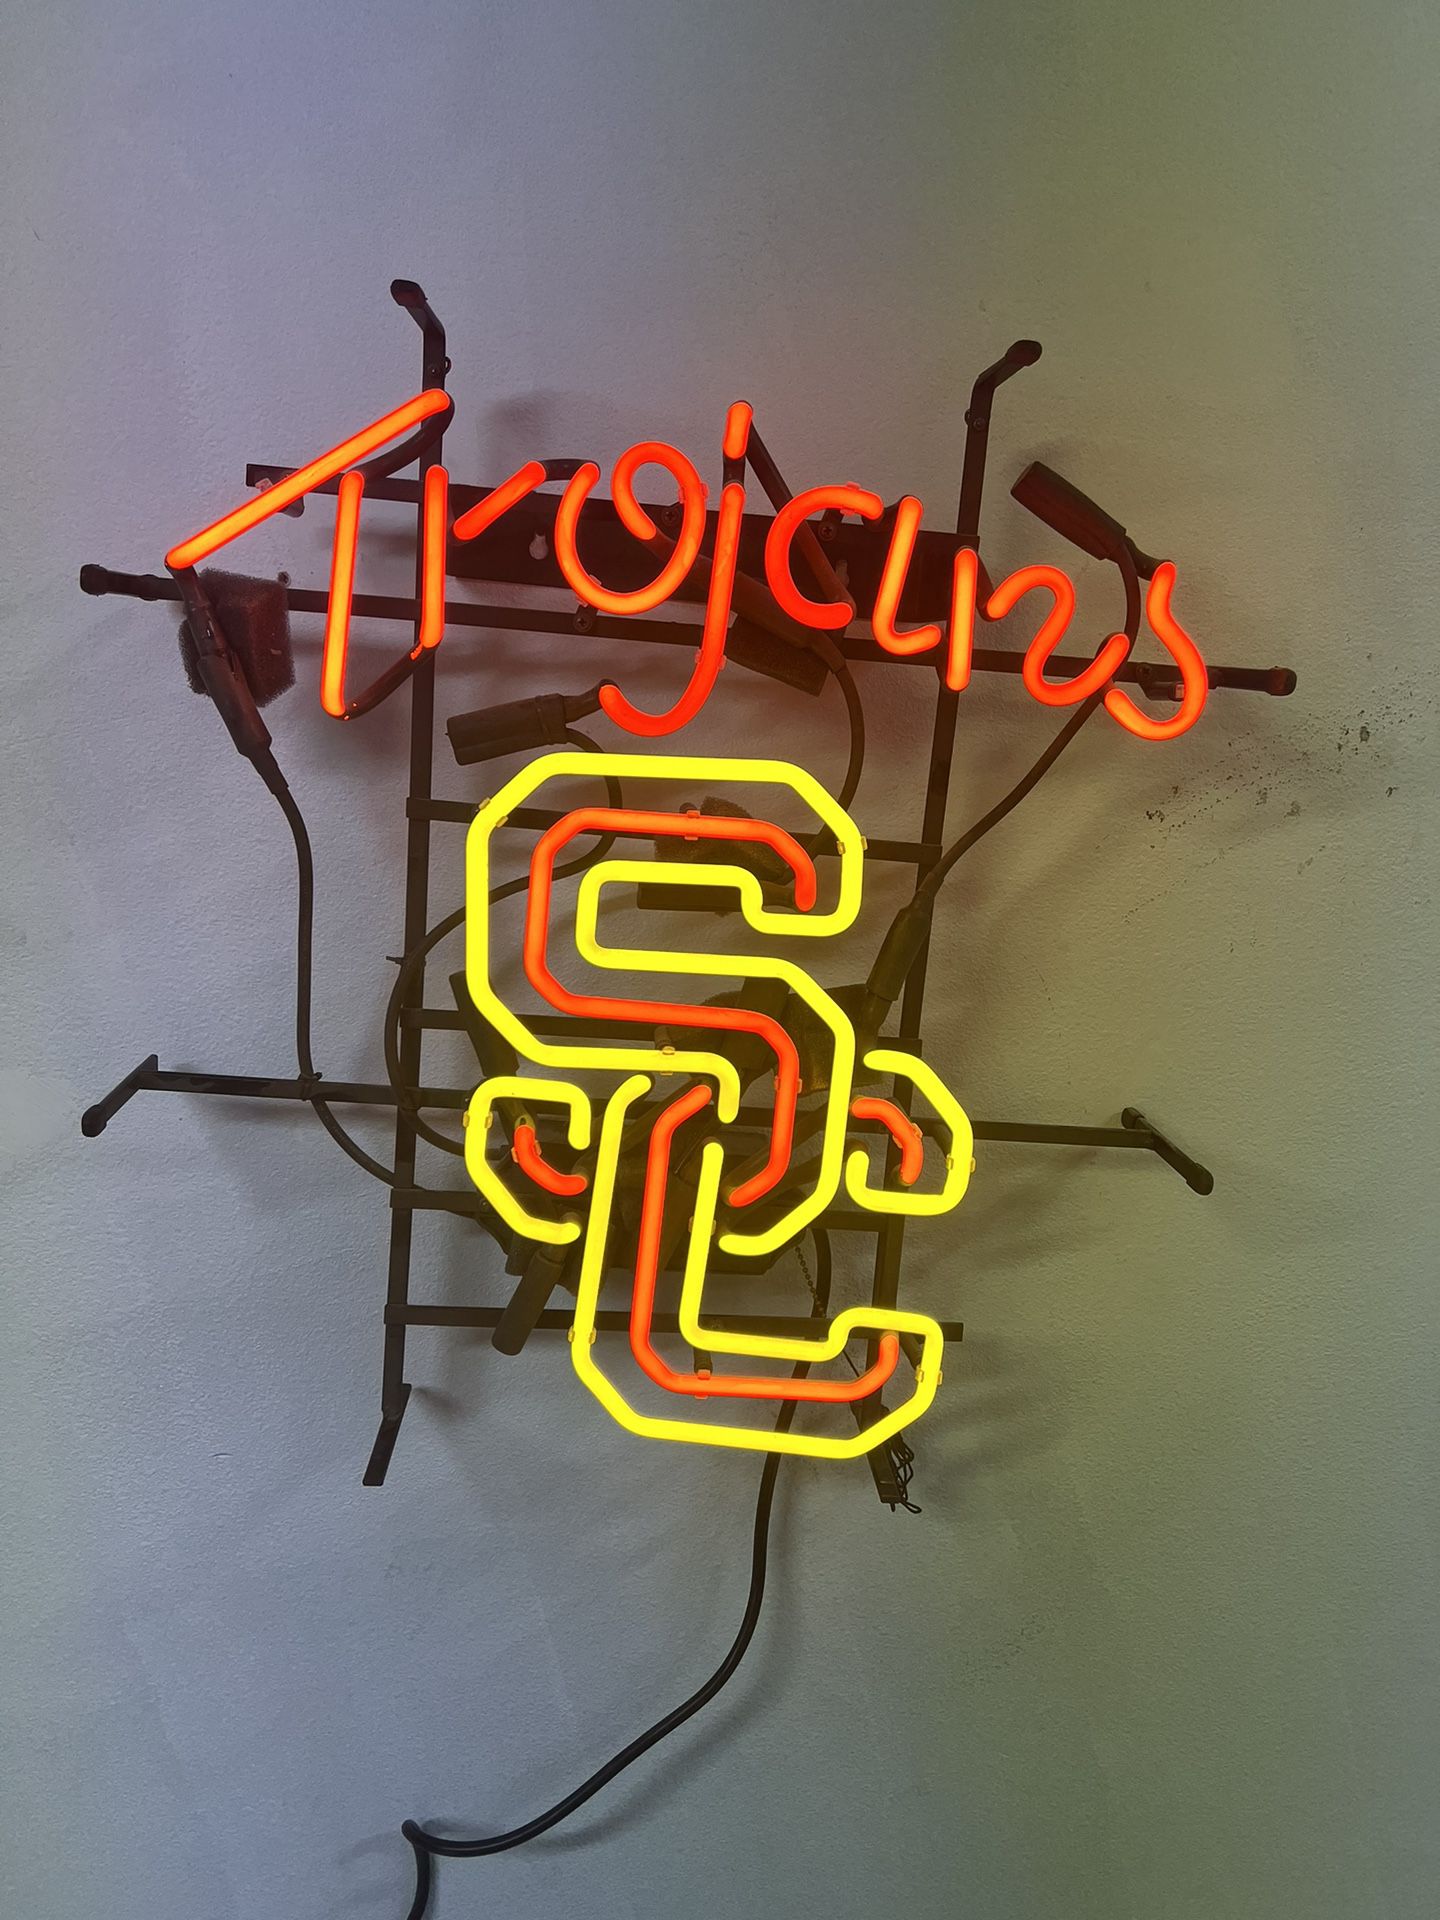 Troy Trojans  Troy trojans, Troy, Neon signs